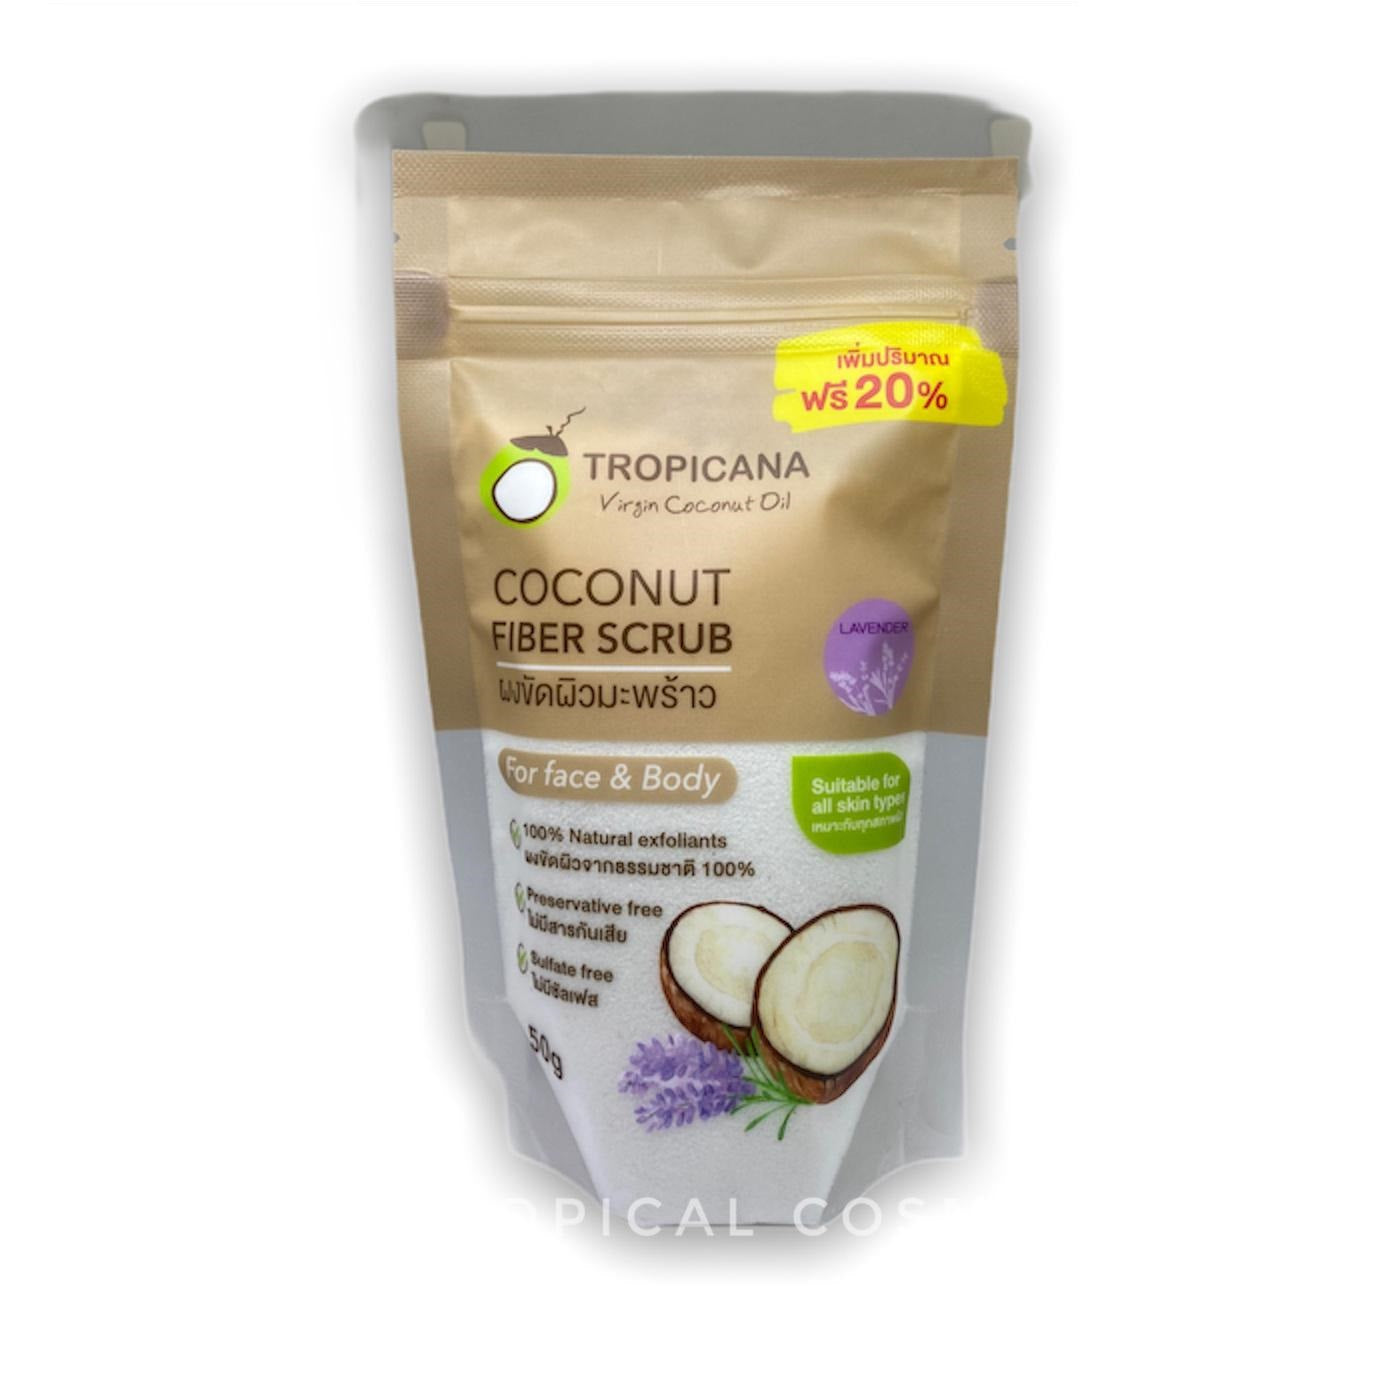 Tropicana Coconut Fiber Scrub 50 g., Файбер-скраб из кокосовой стружки 50 гр.